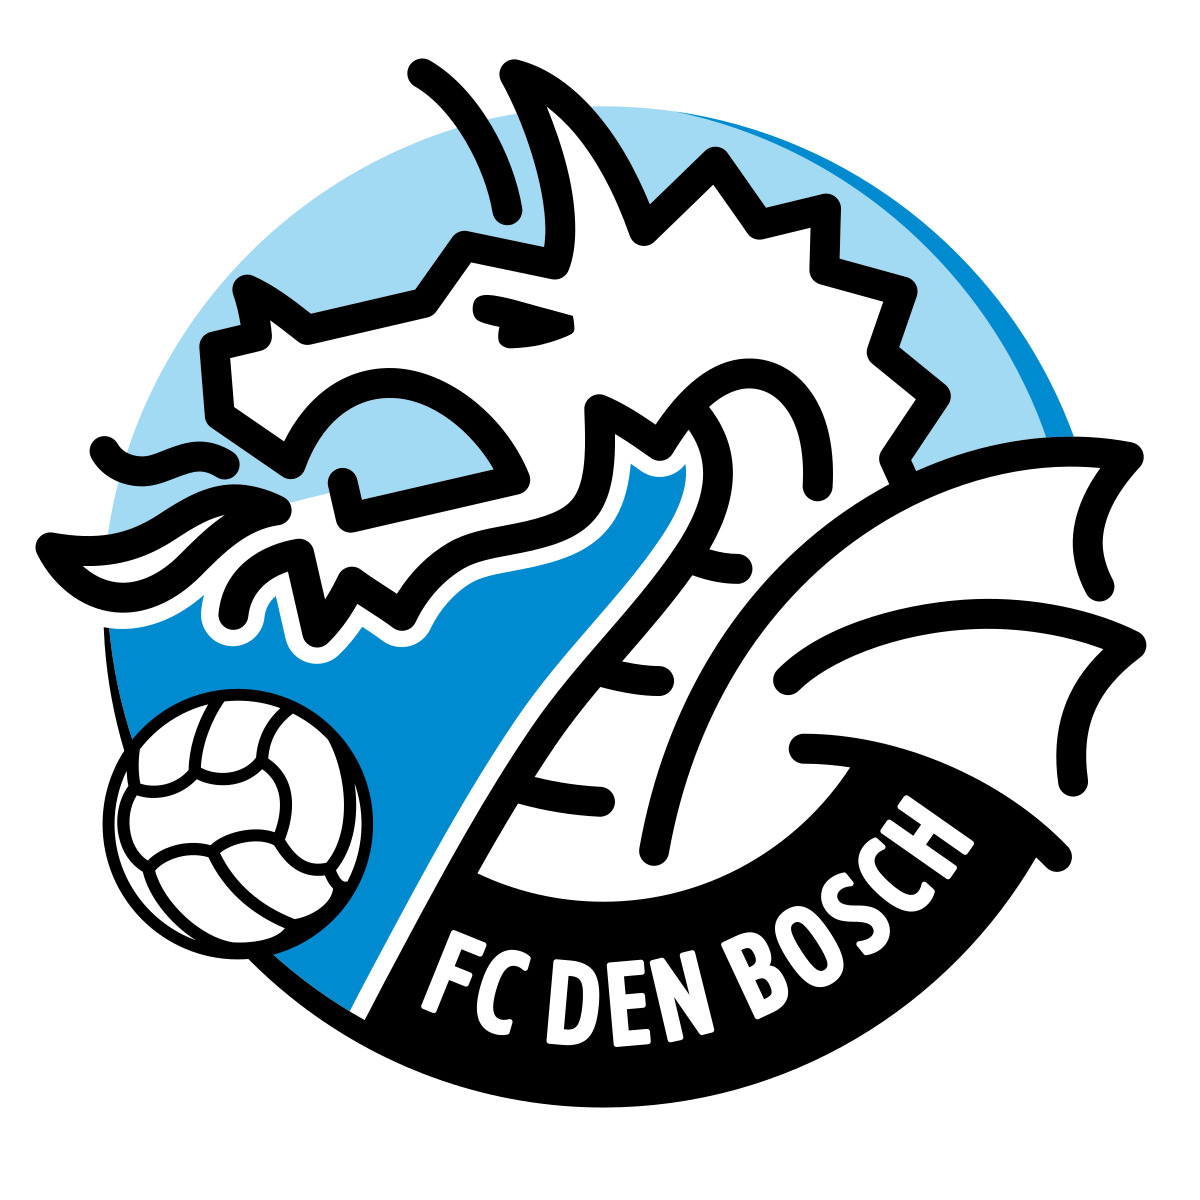 fc-den-bosch-18-football-club-facts